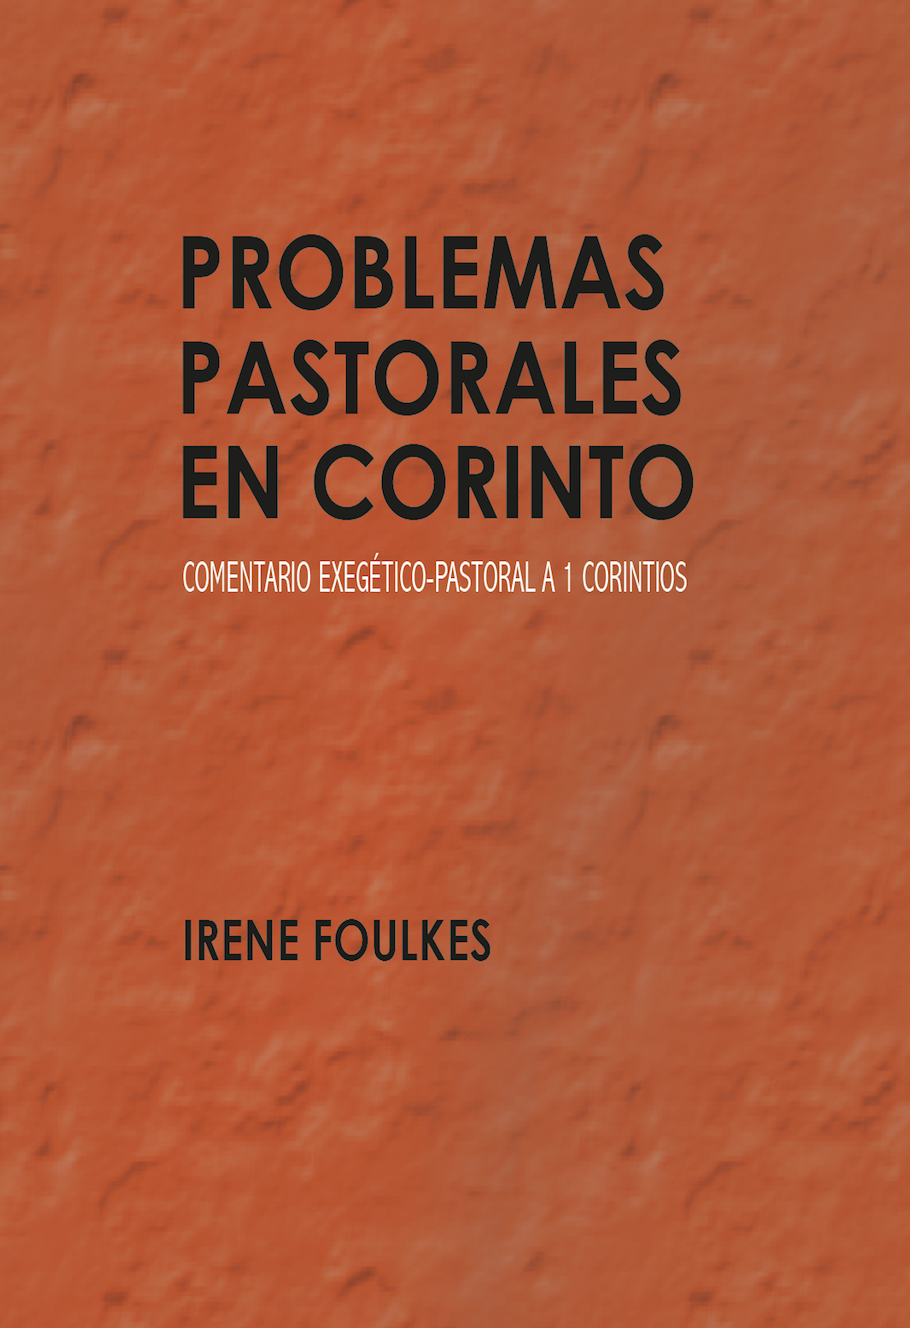 Problemas pastorales en Corinto: Comentario exegético-pastoral a 1 Corintios